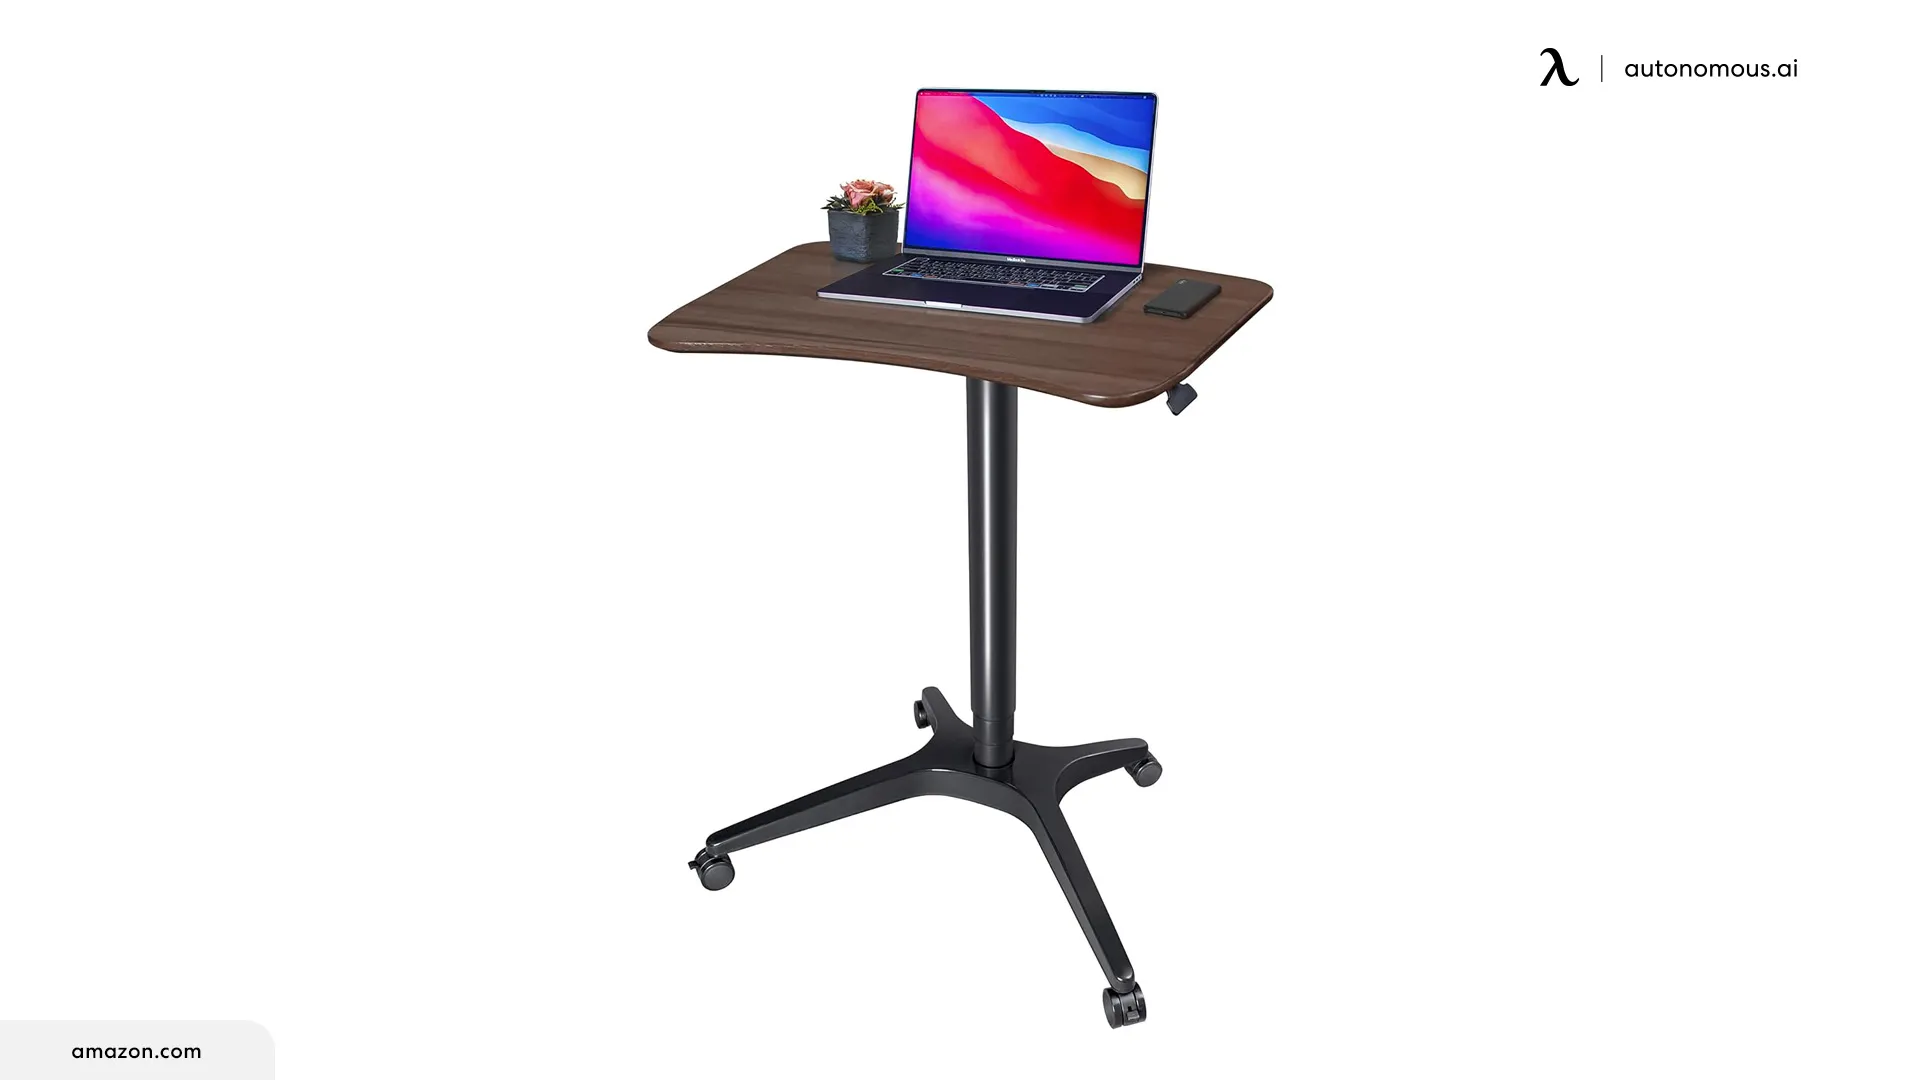 HAOOAH Pneumatic Adjustable Height Desk